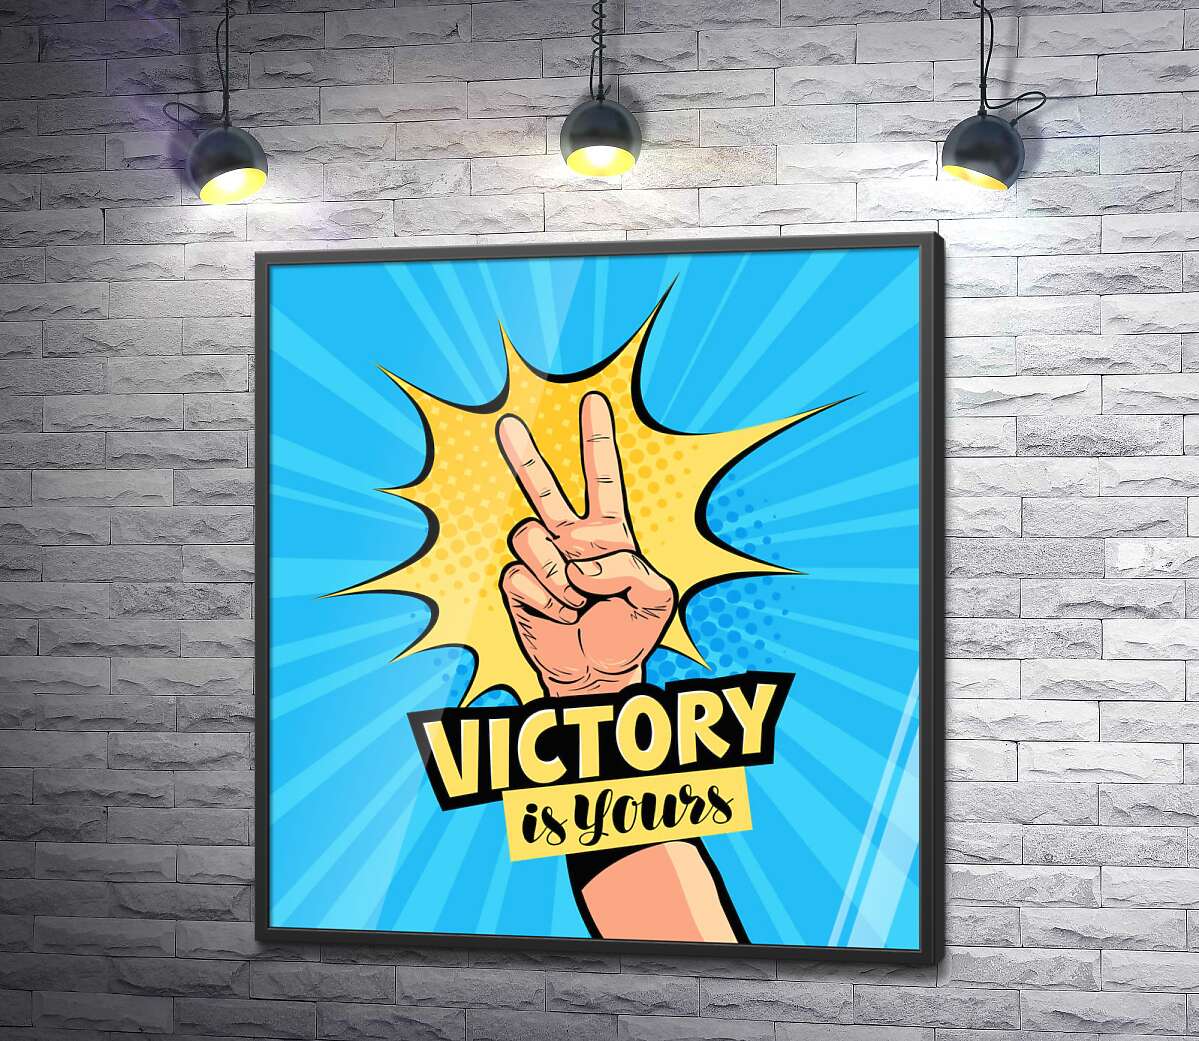 постер Символ победы дополняет фразу "victory is yours"